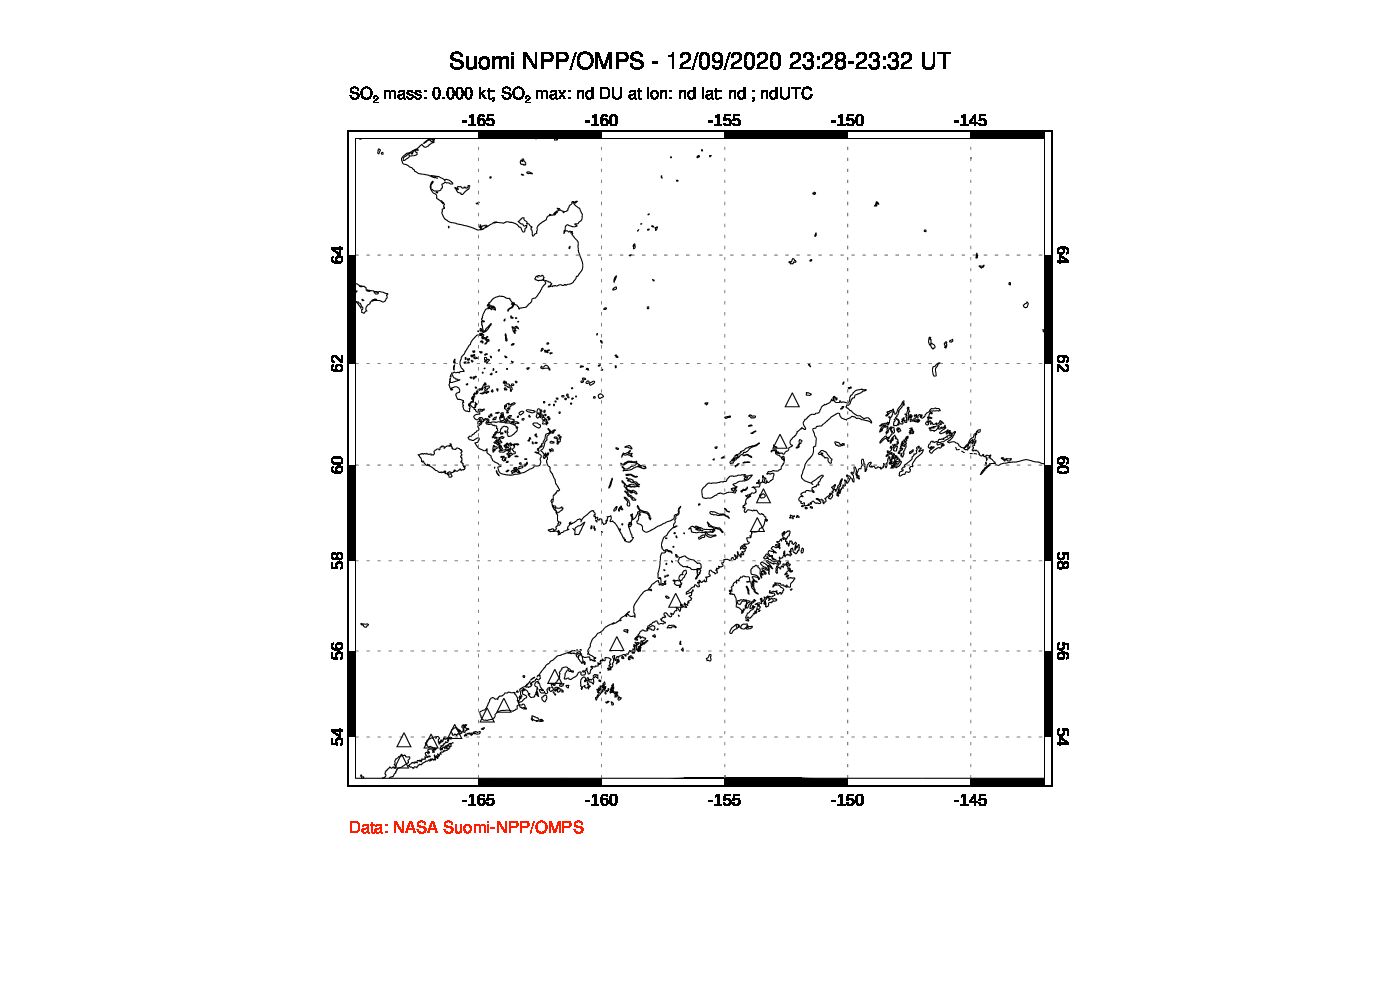 A sulfur dioxide image over Alaska, USA on Dec 09, 2020.